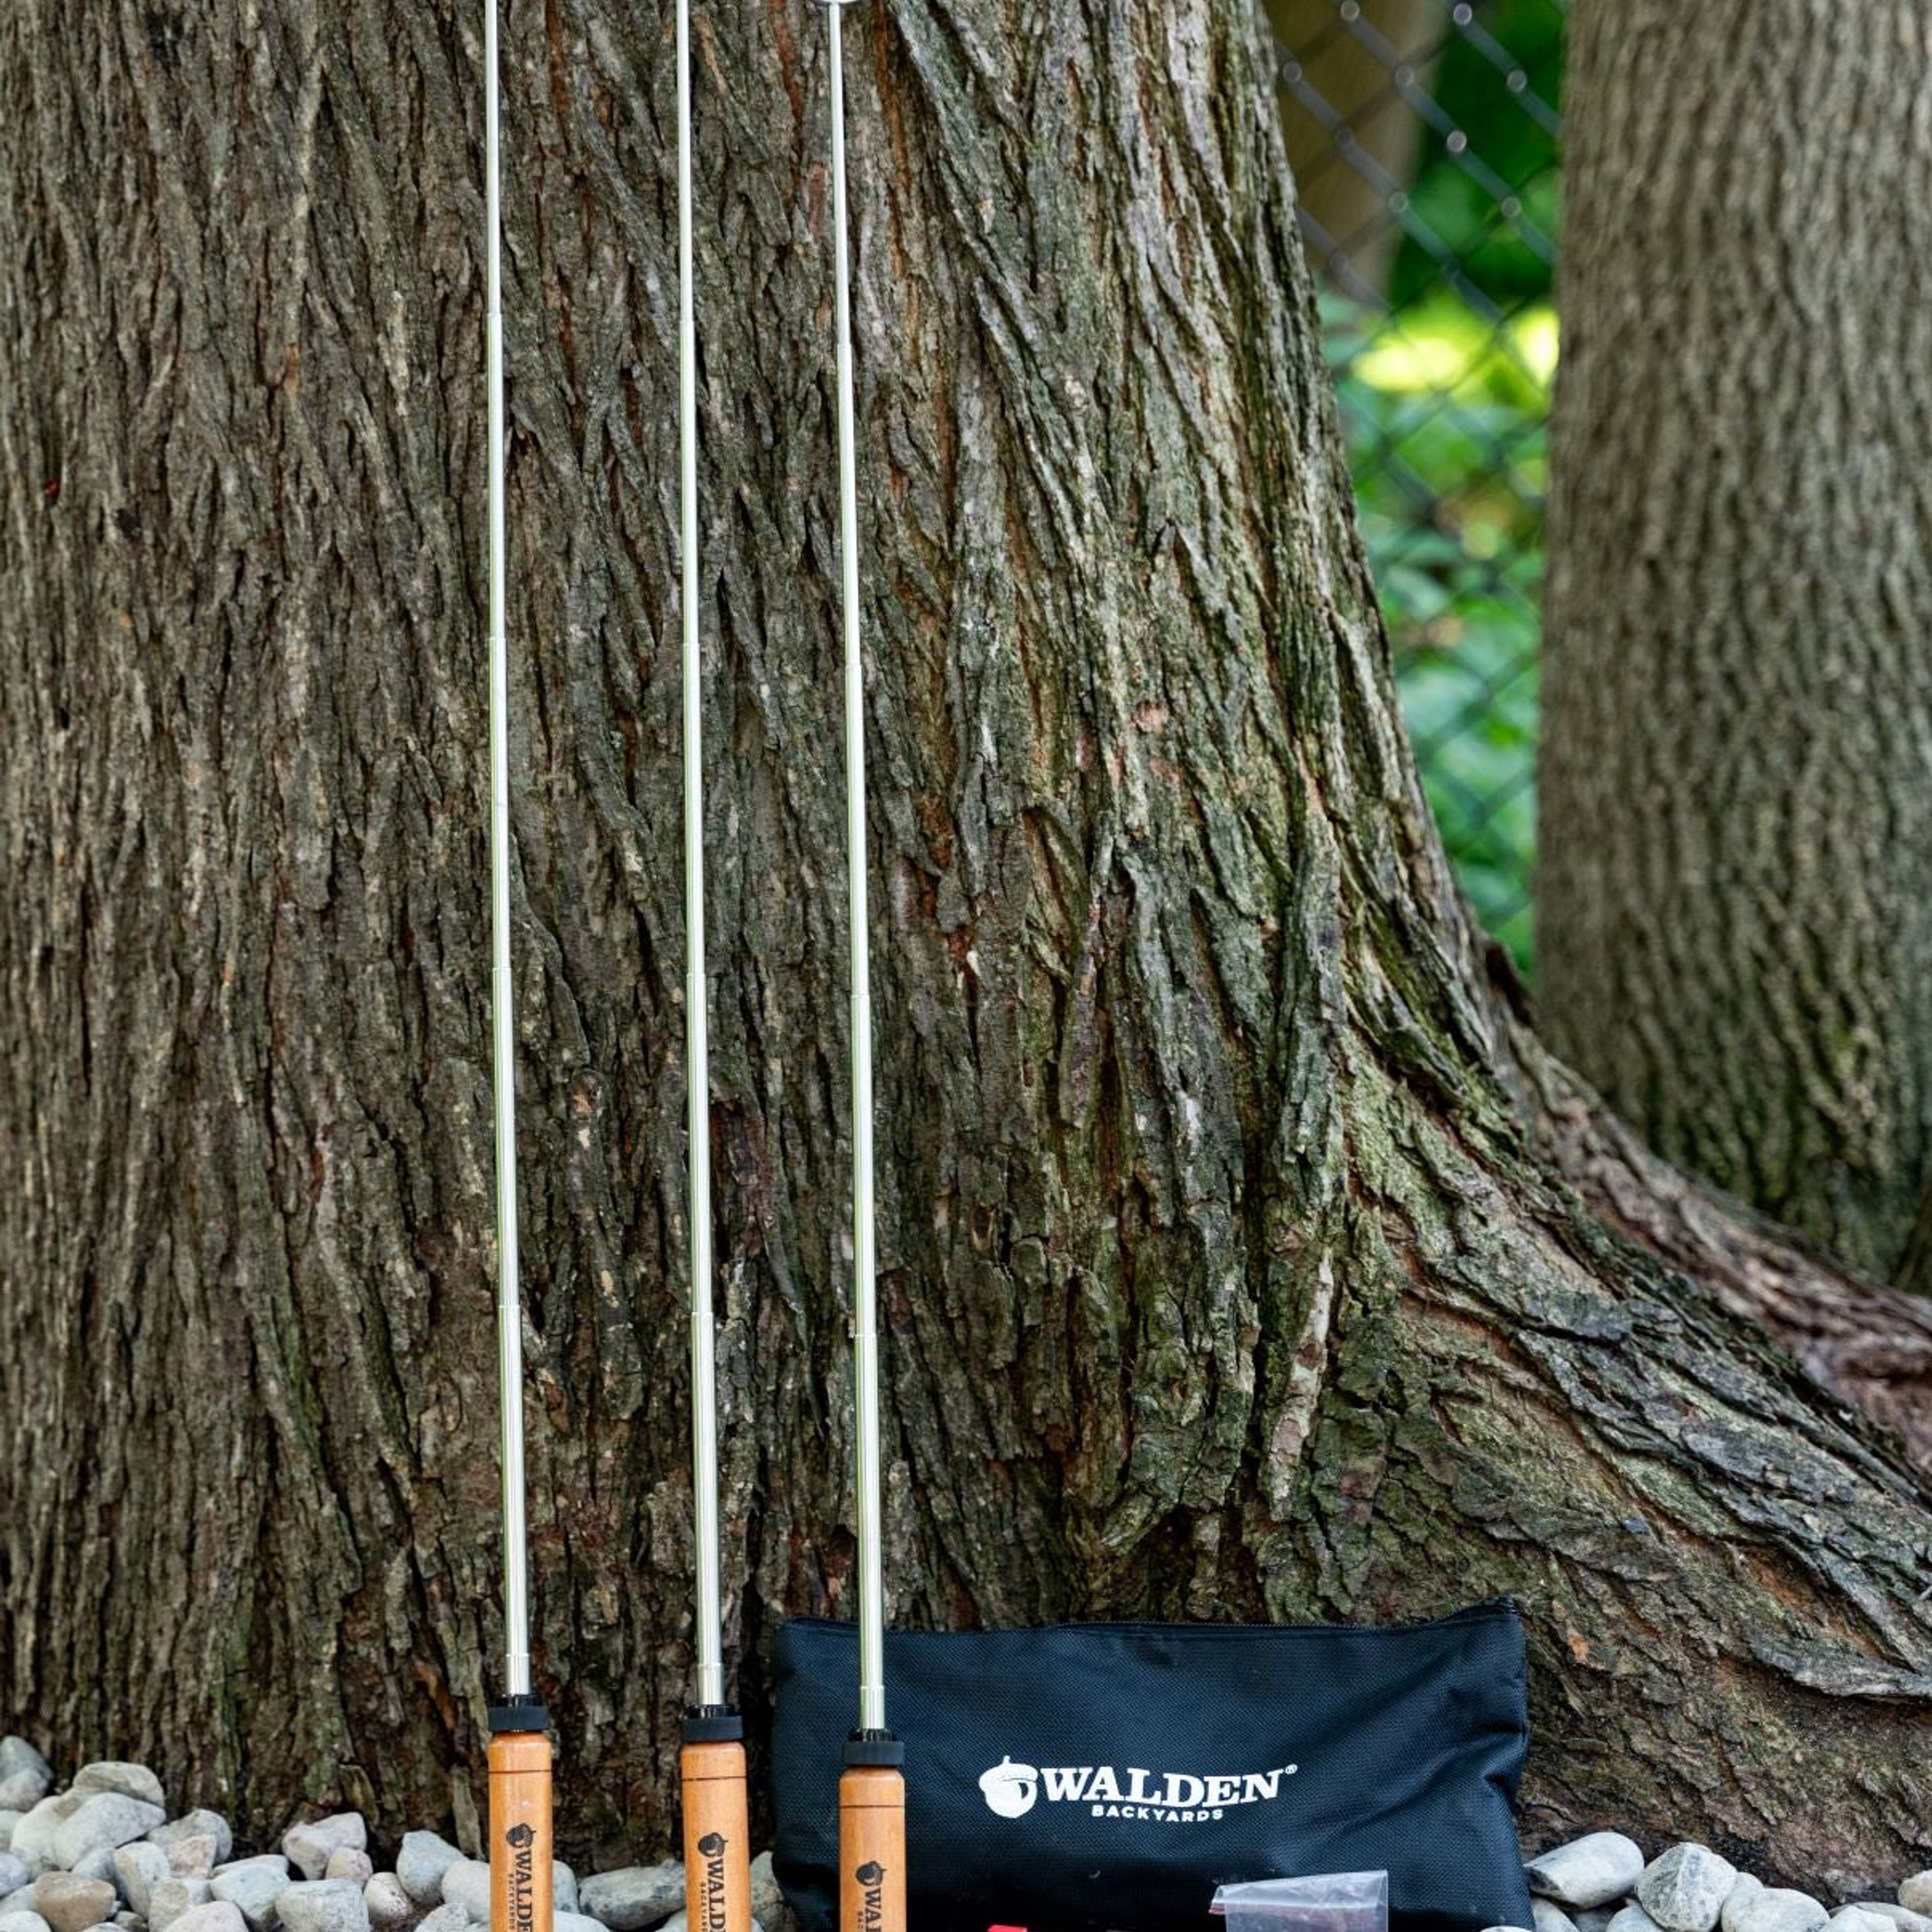 Walden Legacy Series Classic Extendable Roasting Sticks